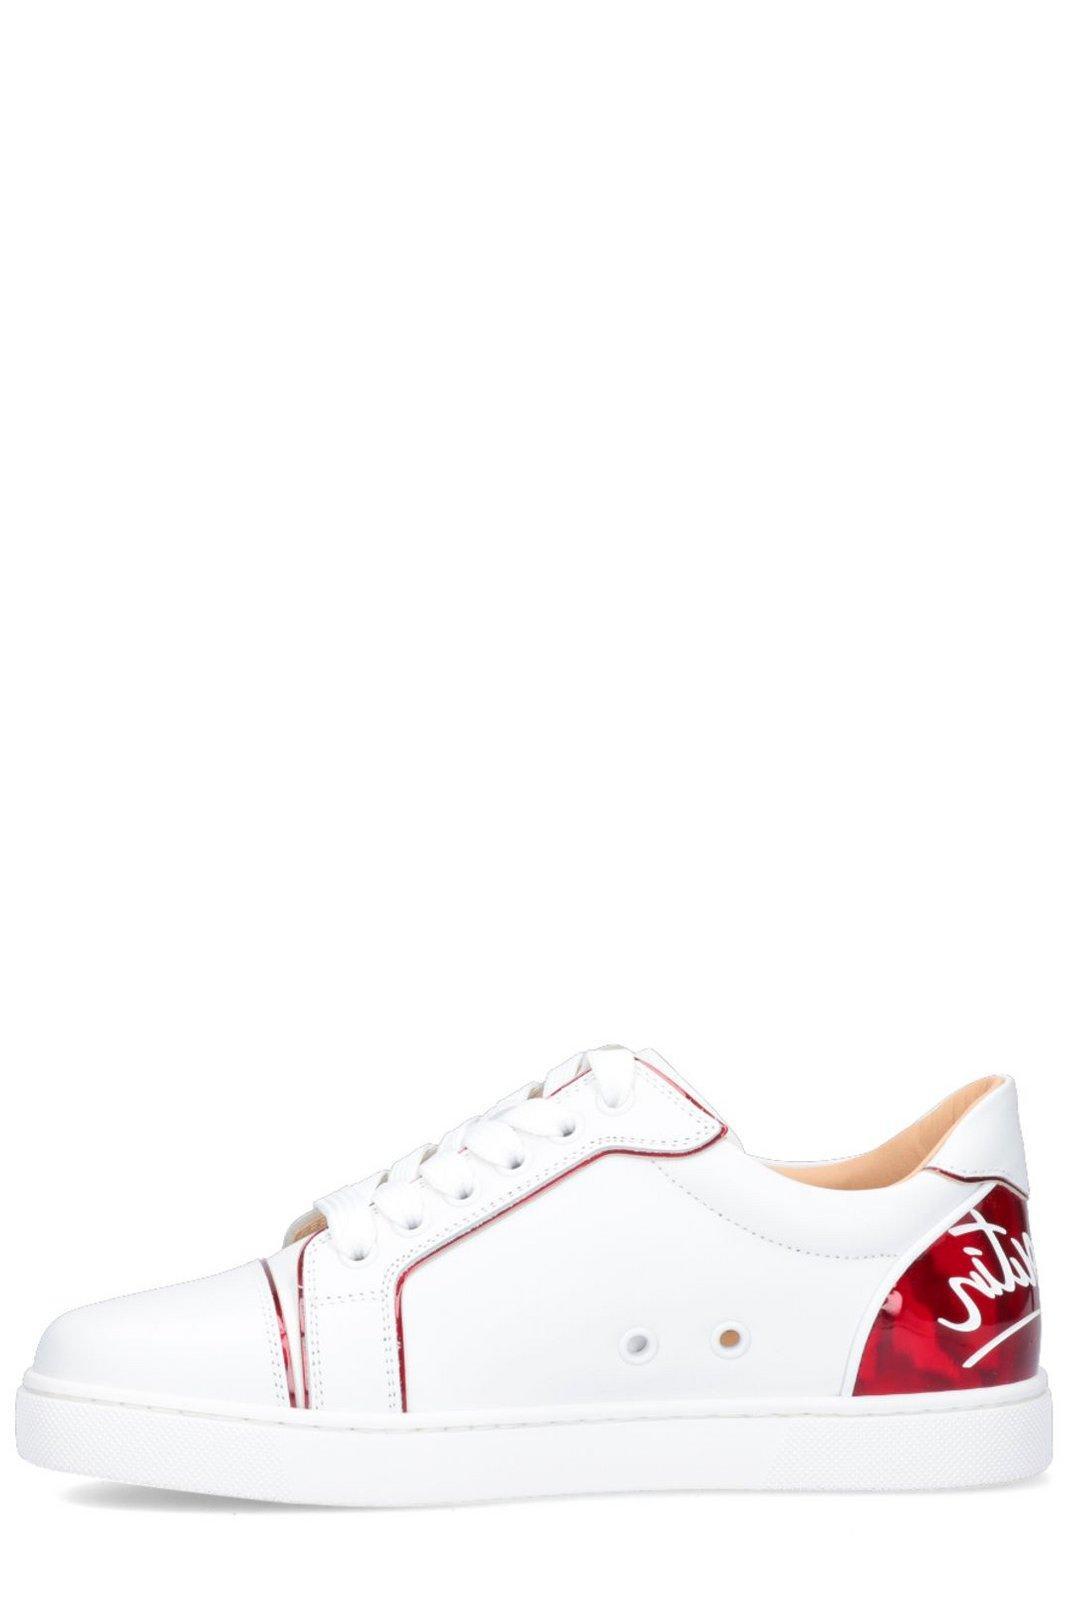 Vieira - Sneakers - Calf leather - Bianco - Christian Louboutin